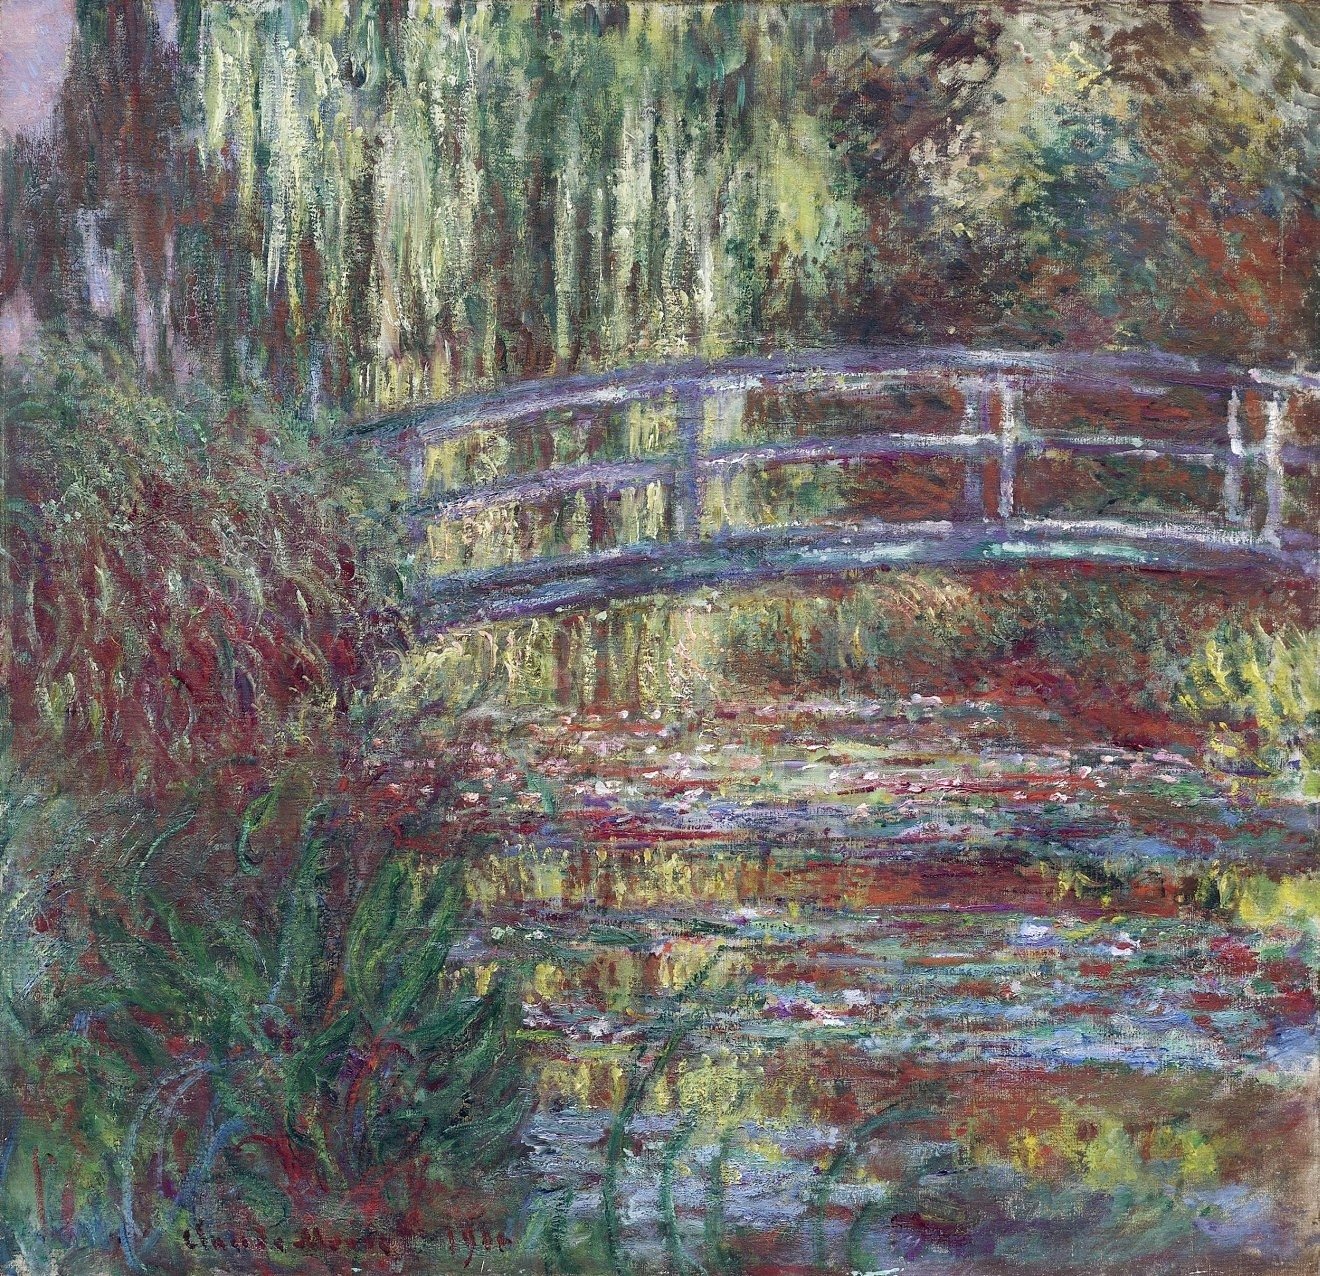 Claude+Monet-1840-1926 (407).jpg